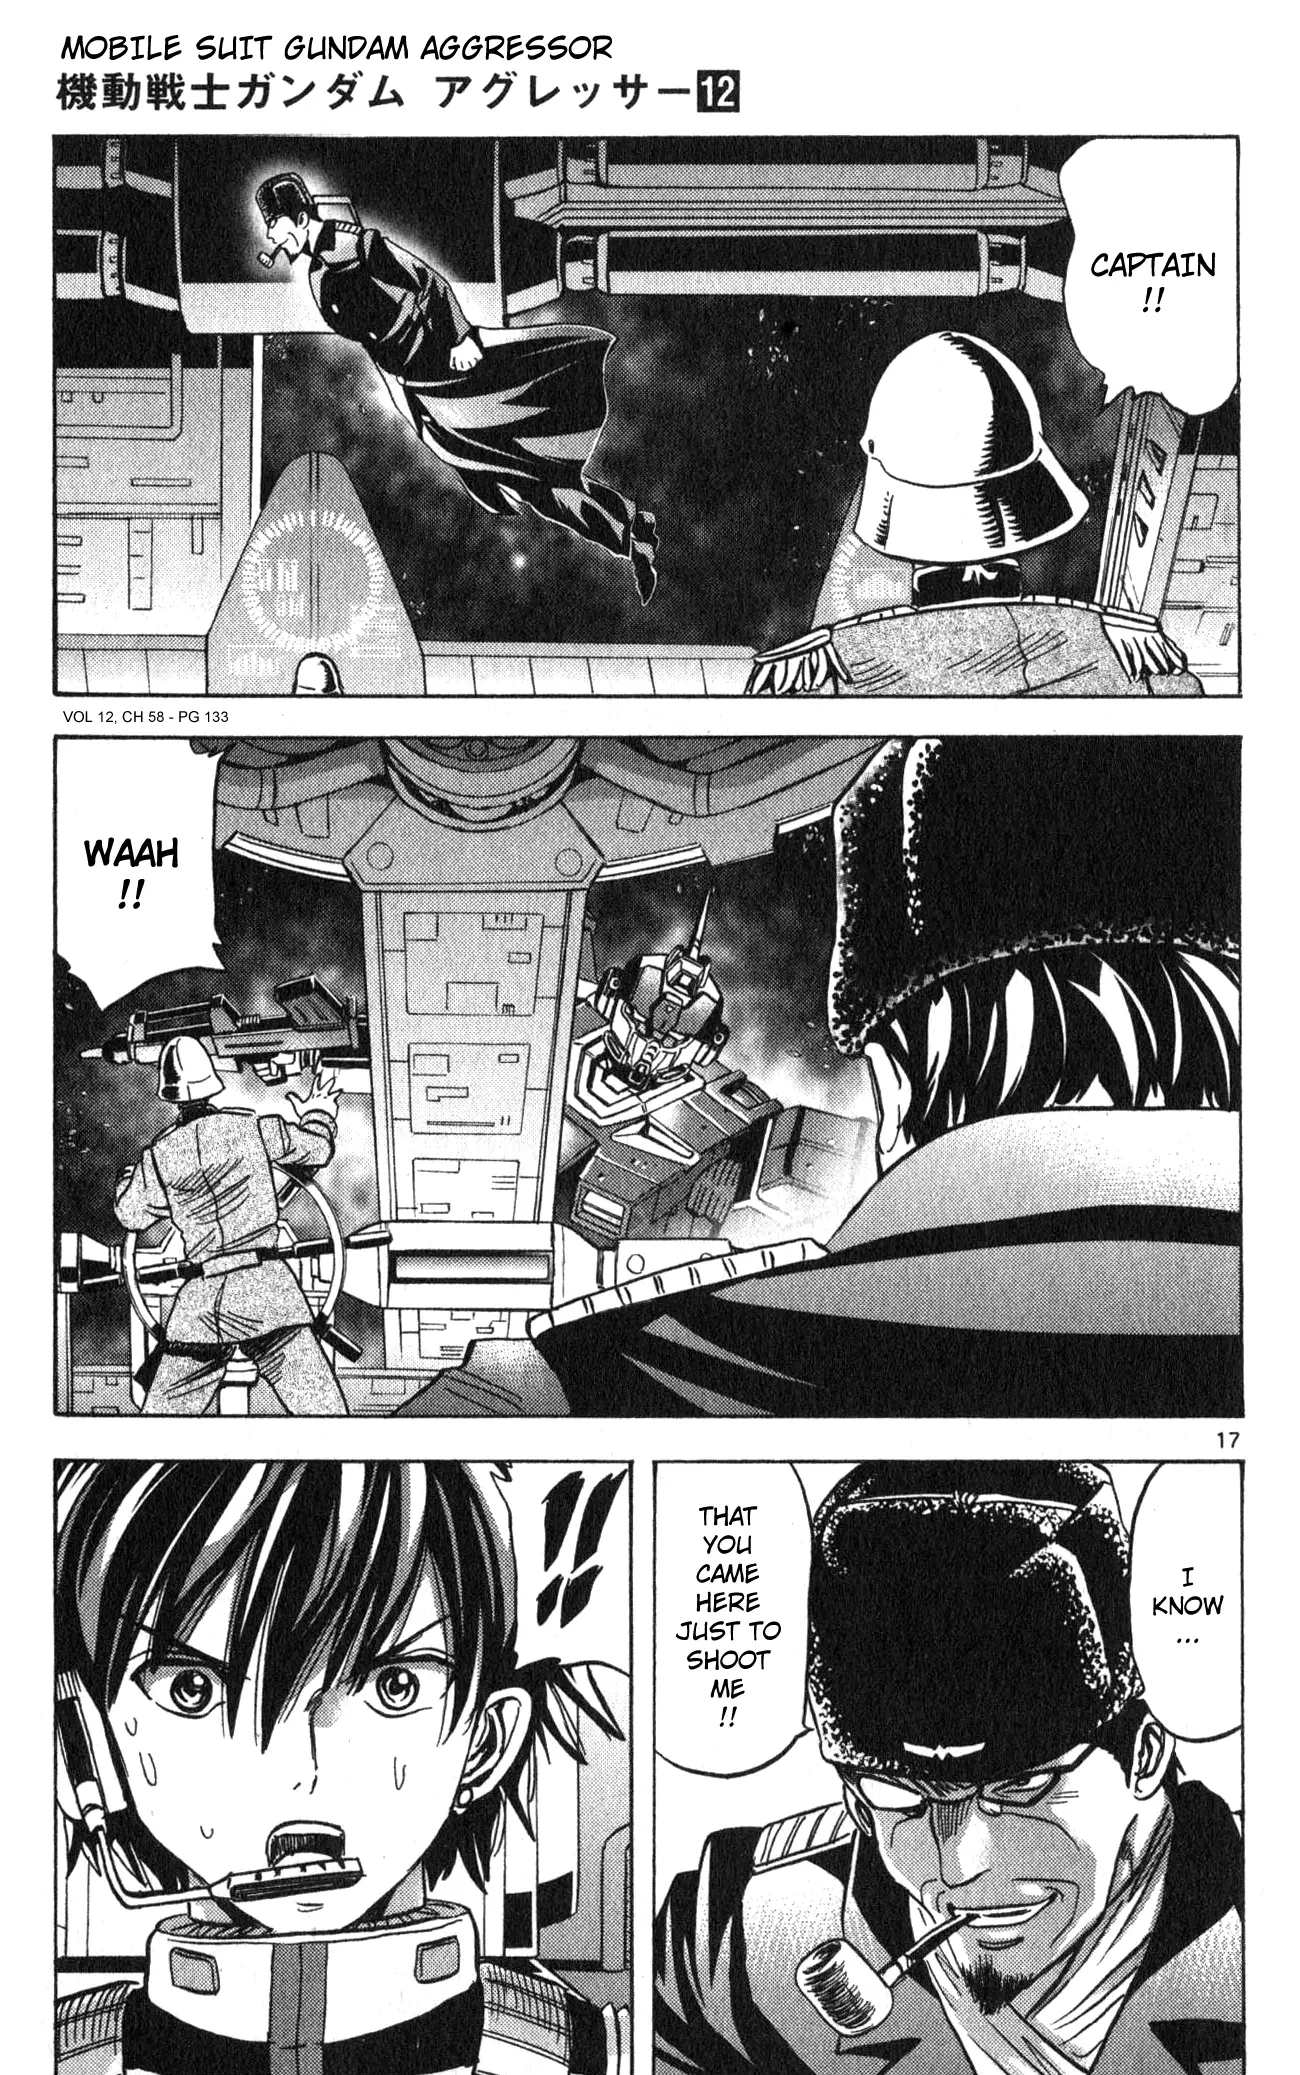 Mobile Suit Gundam Aggressor - 58 page 15-09140ca2